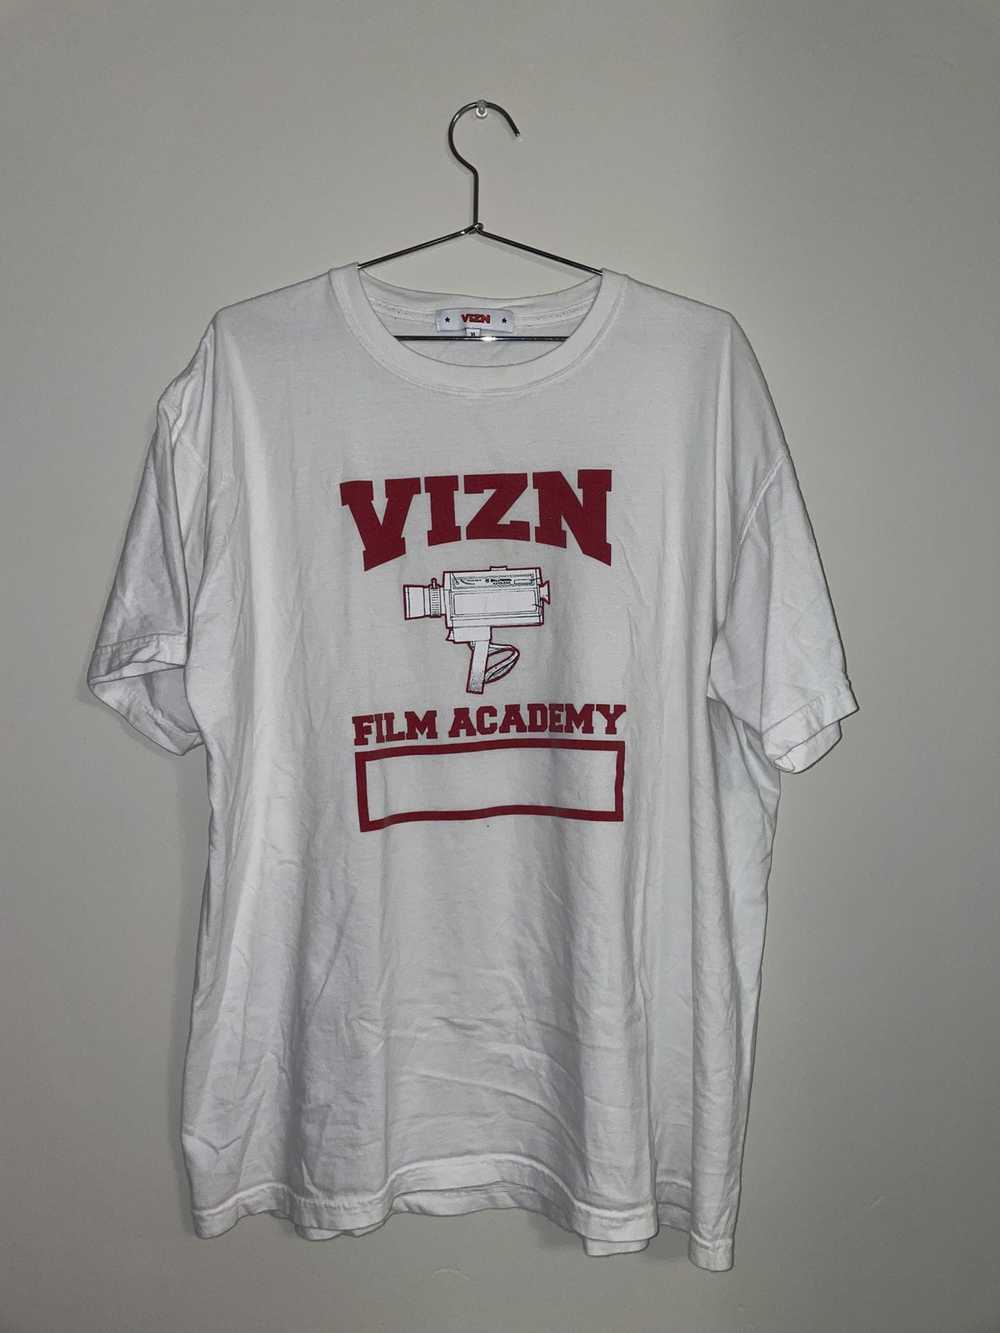 Joy Divizn VIZN Film Academy Tee (Red) - image 1